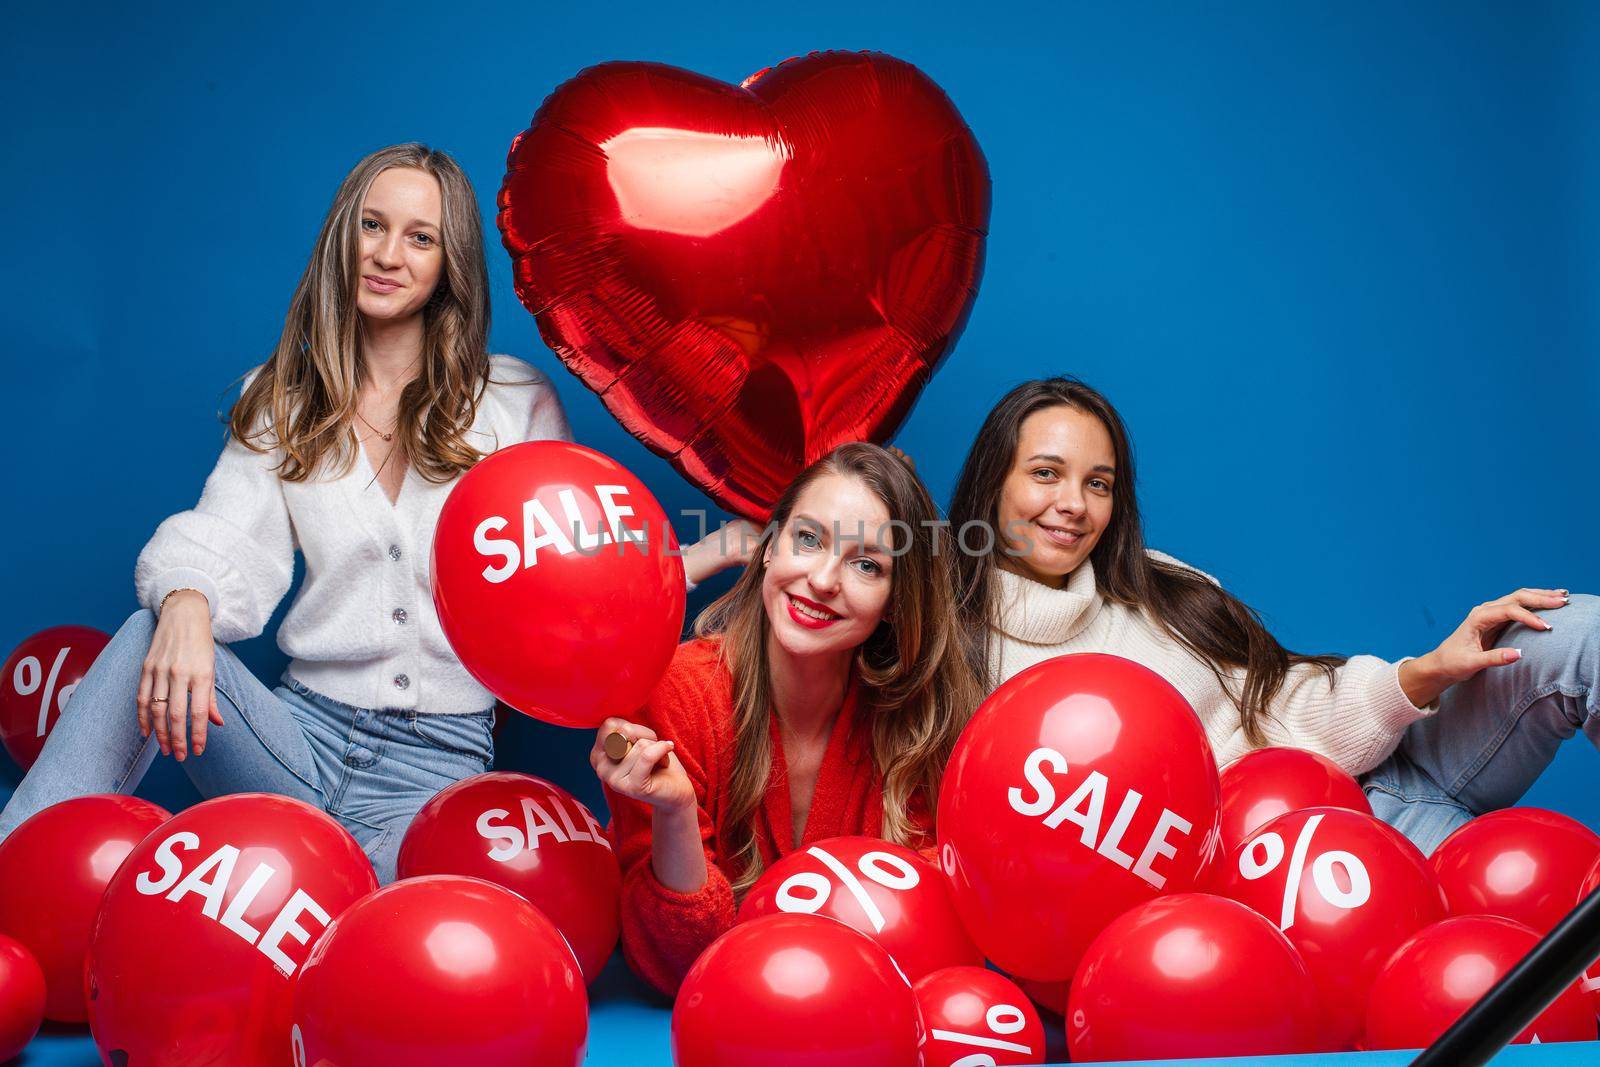 Smiling three women posing near big red heart-shaped balloon in studio by StudioLucky